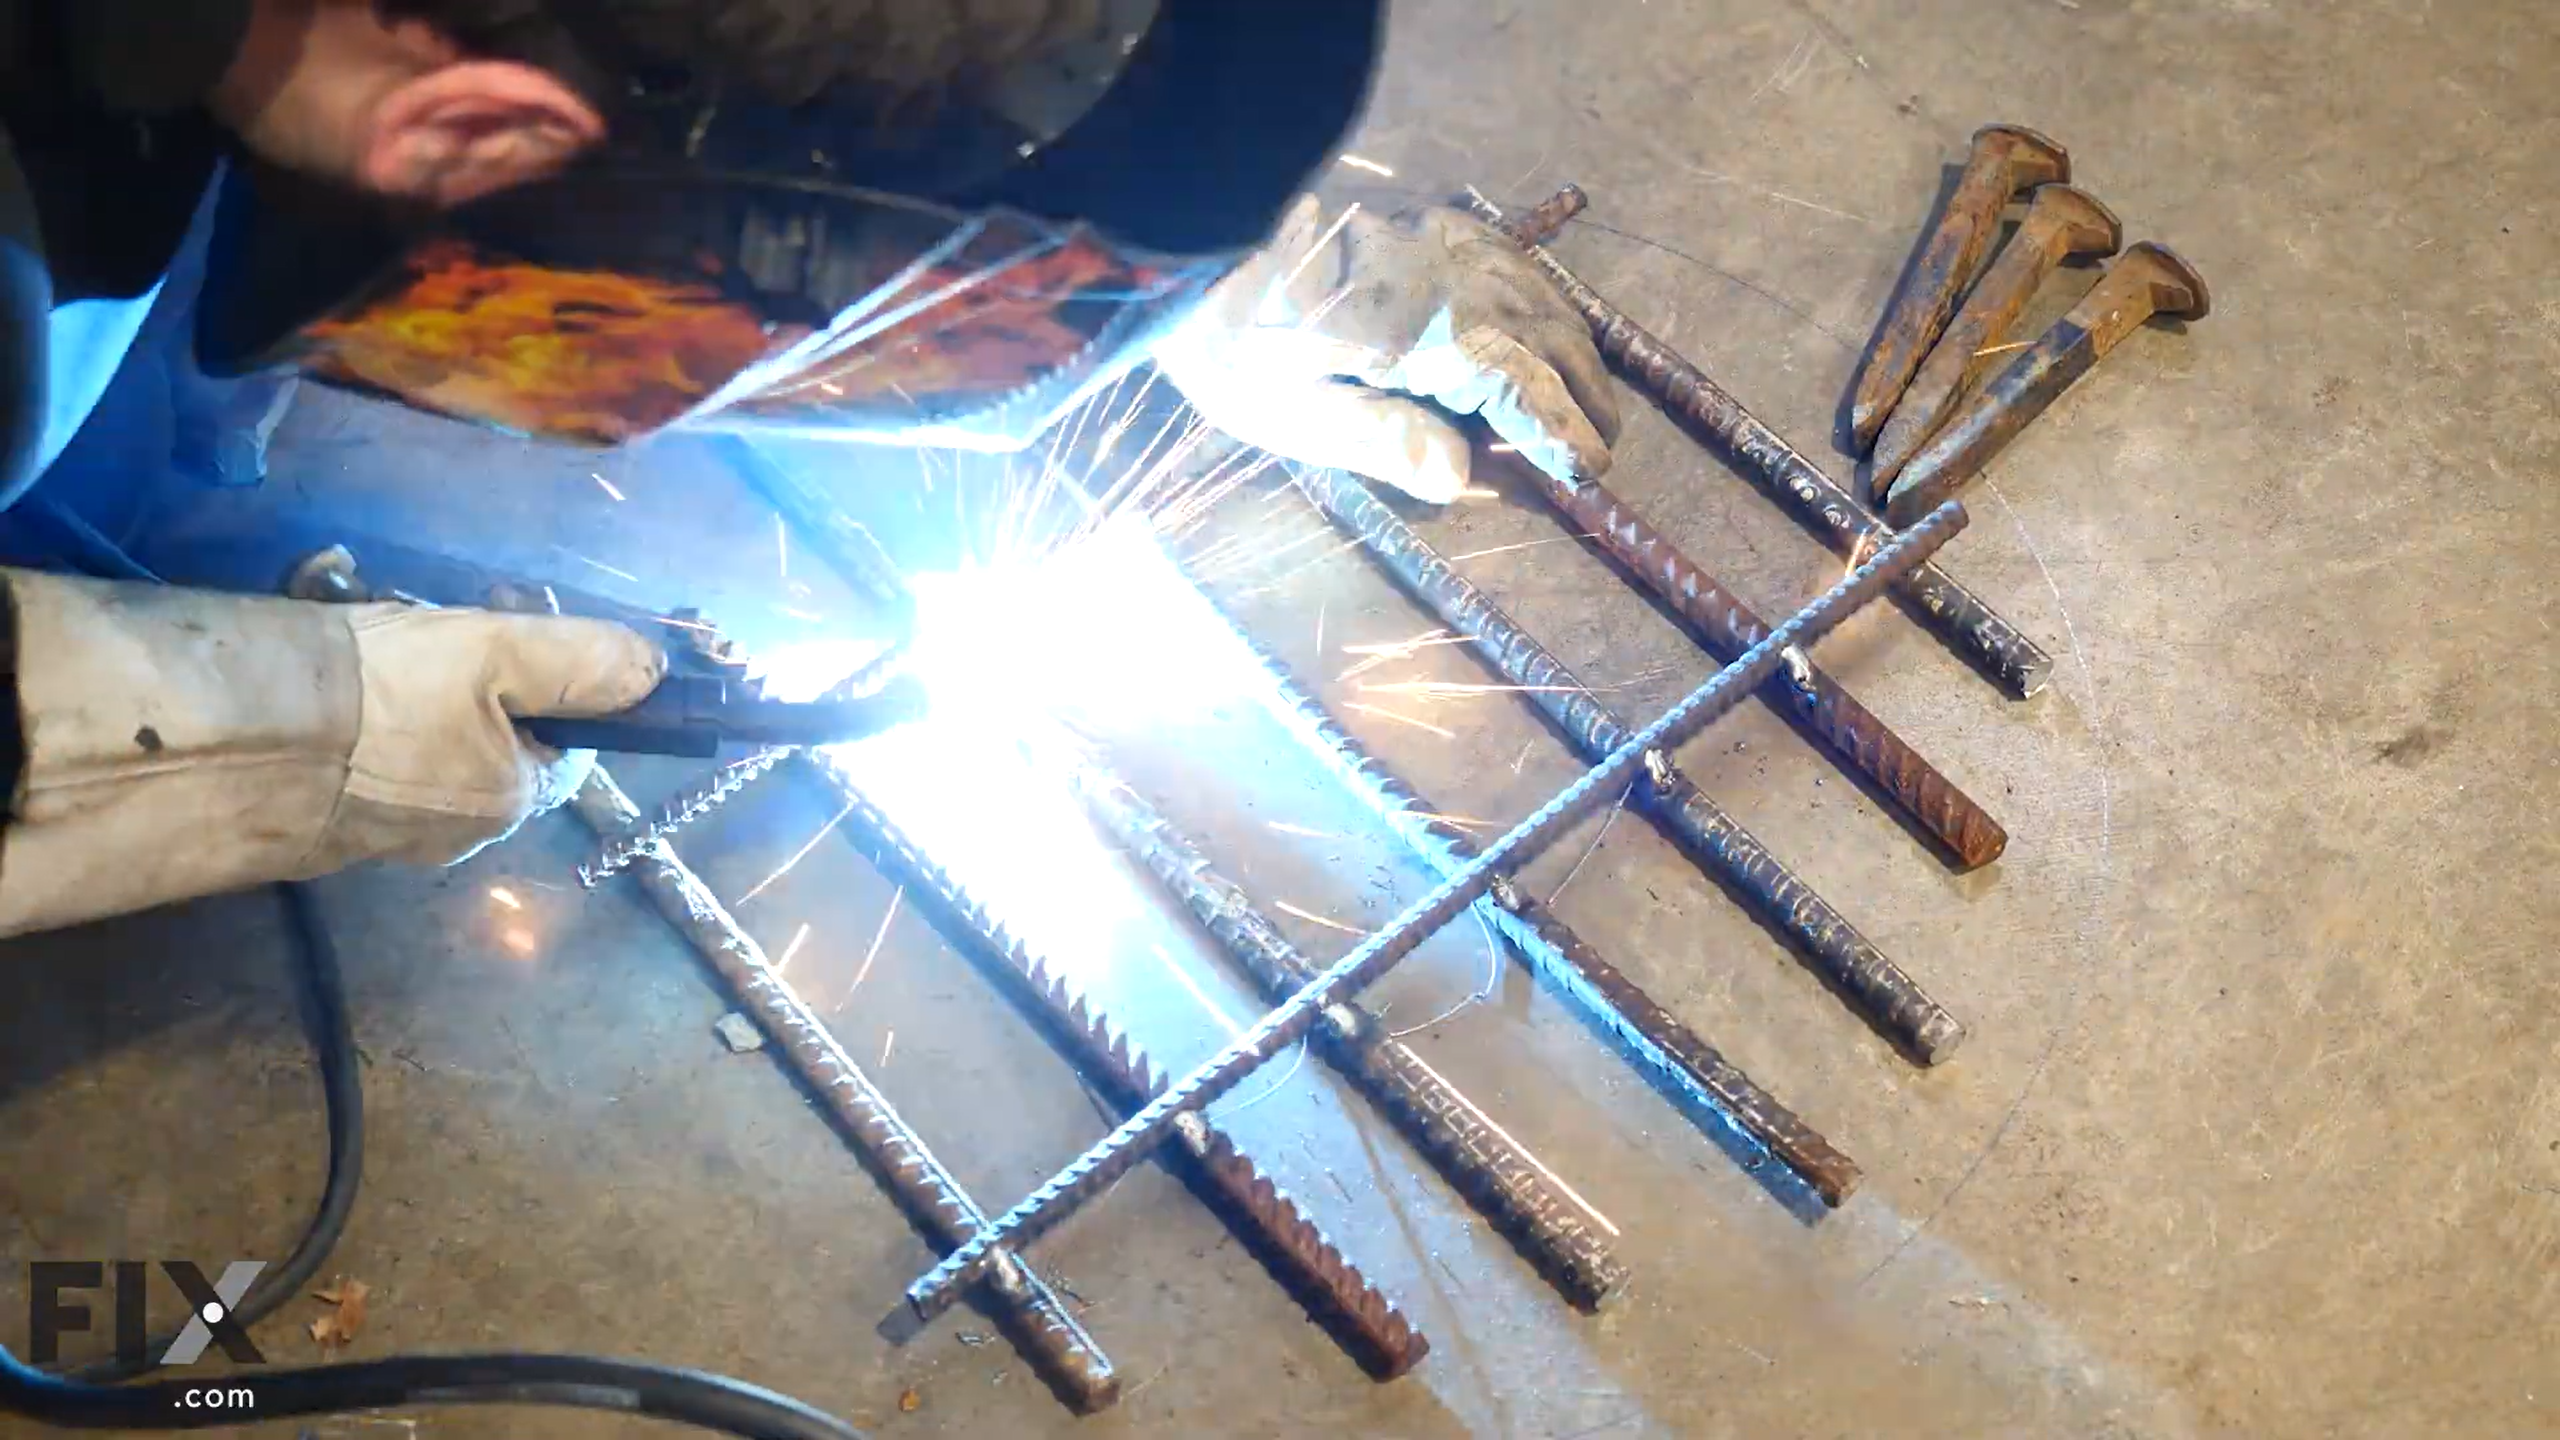 Welder creating sparks welding grate together with metal.